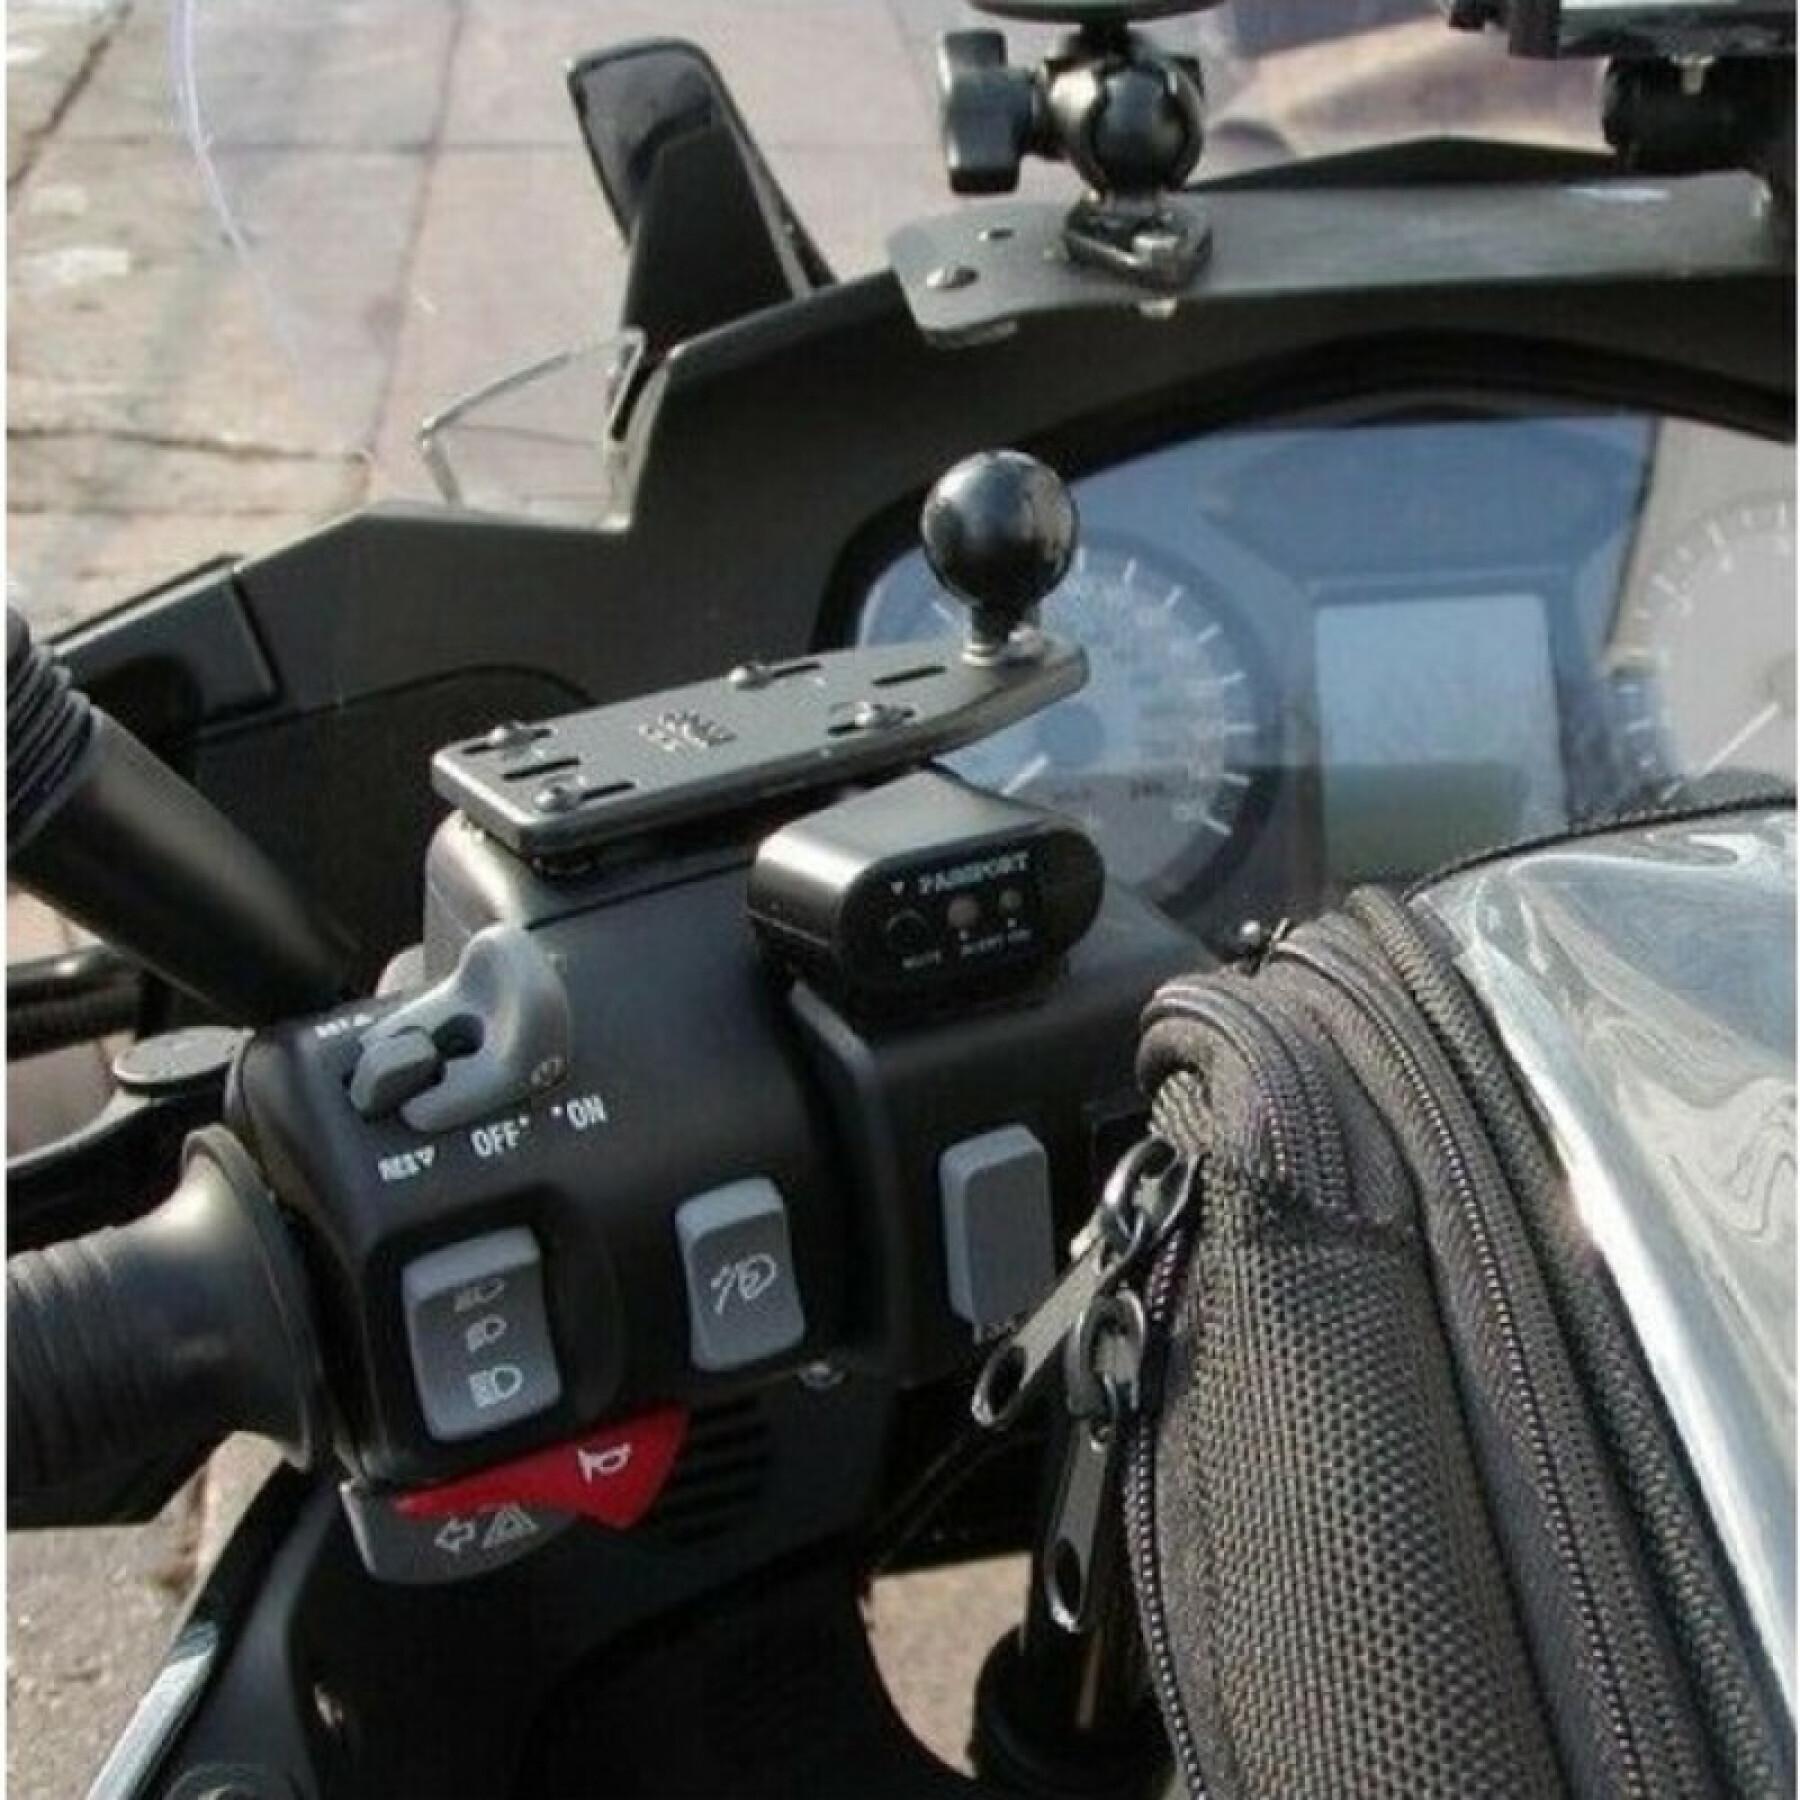 Smartphone-Halterung Motorrad Basis Befestigung an Lenker oder Brems-/Kupplungsbehälter Kugel b exzentrisch RAM Mounts